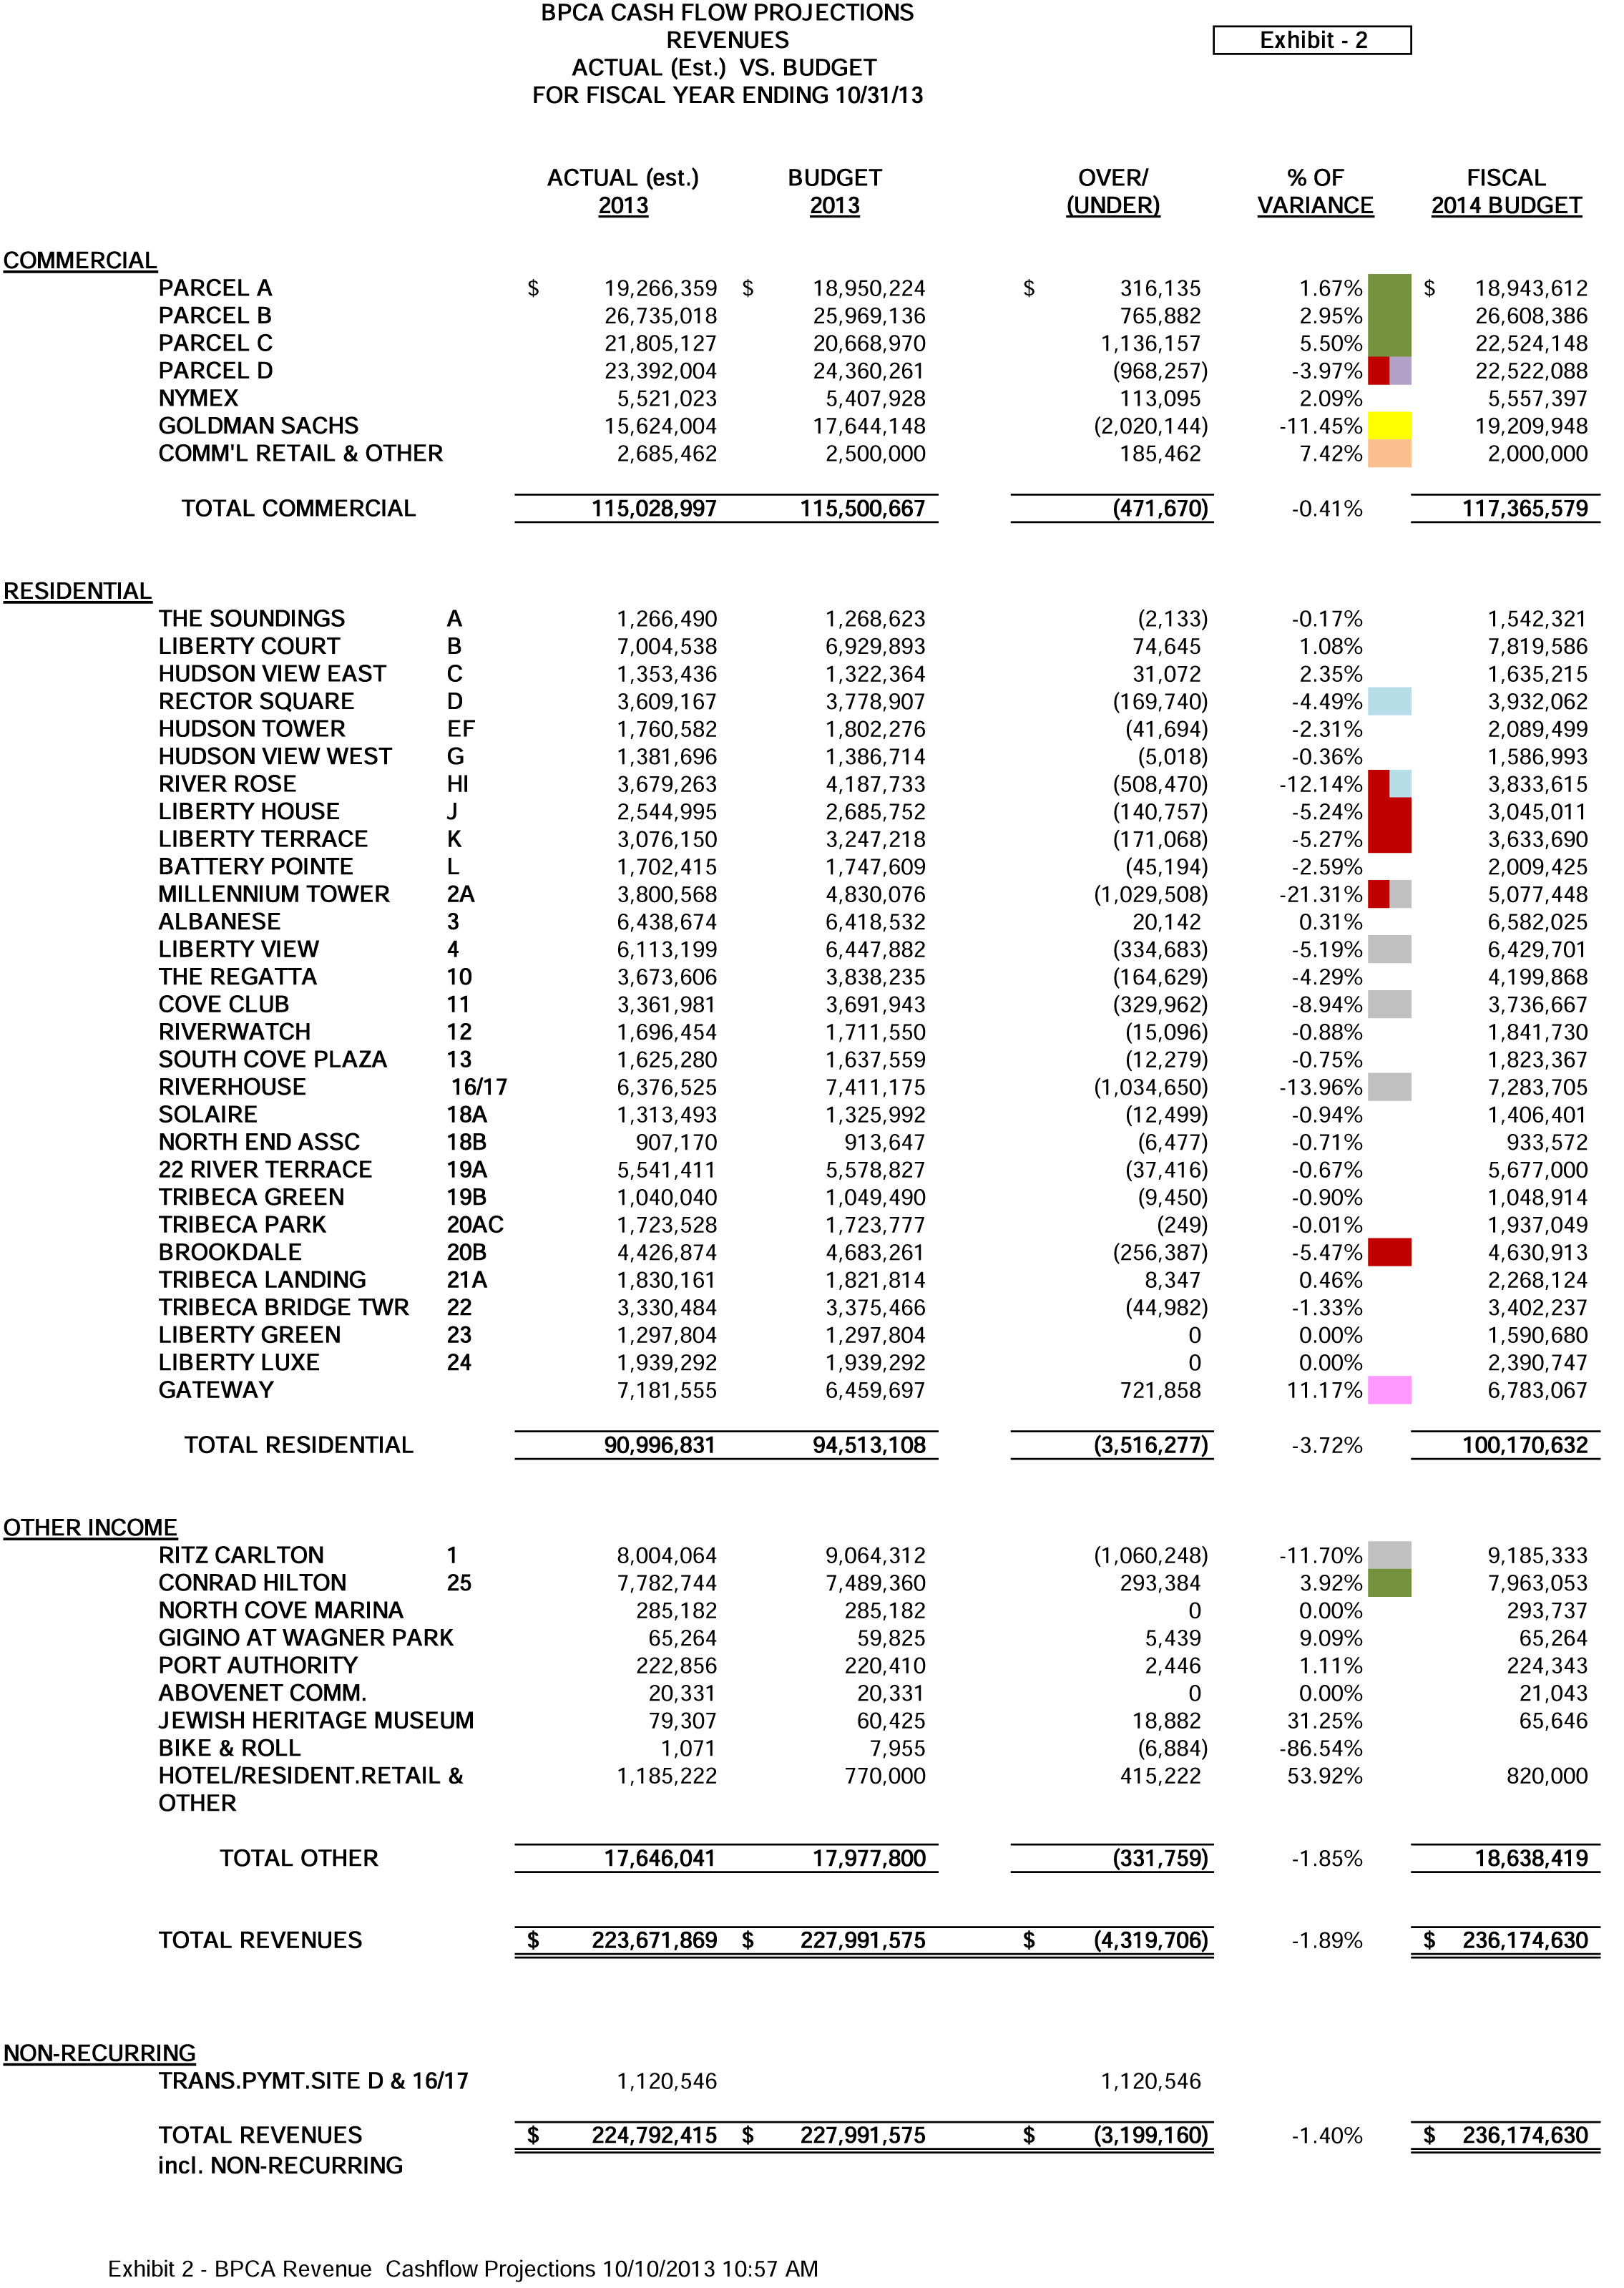 BPCA revenue from each building F2014